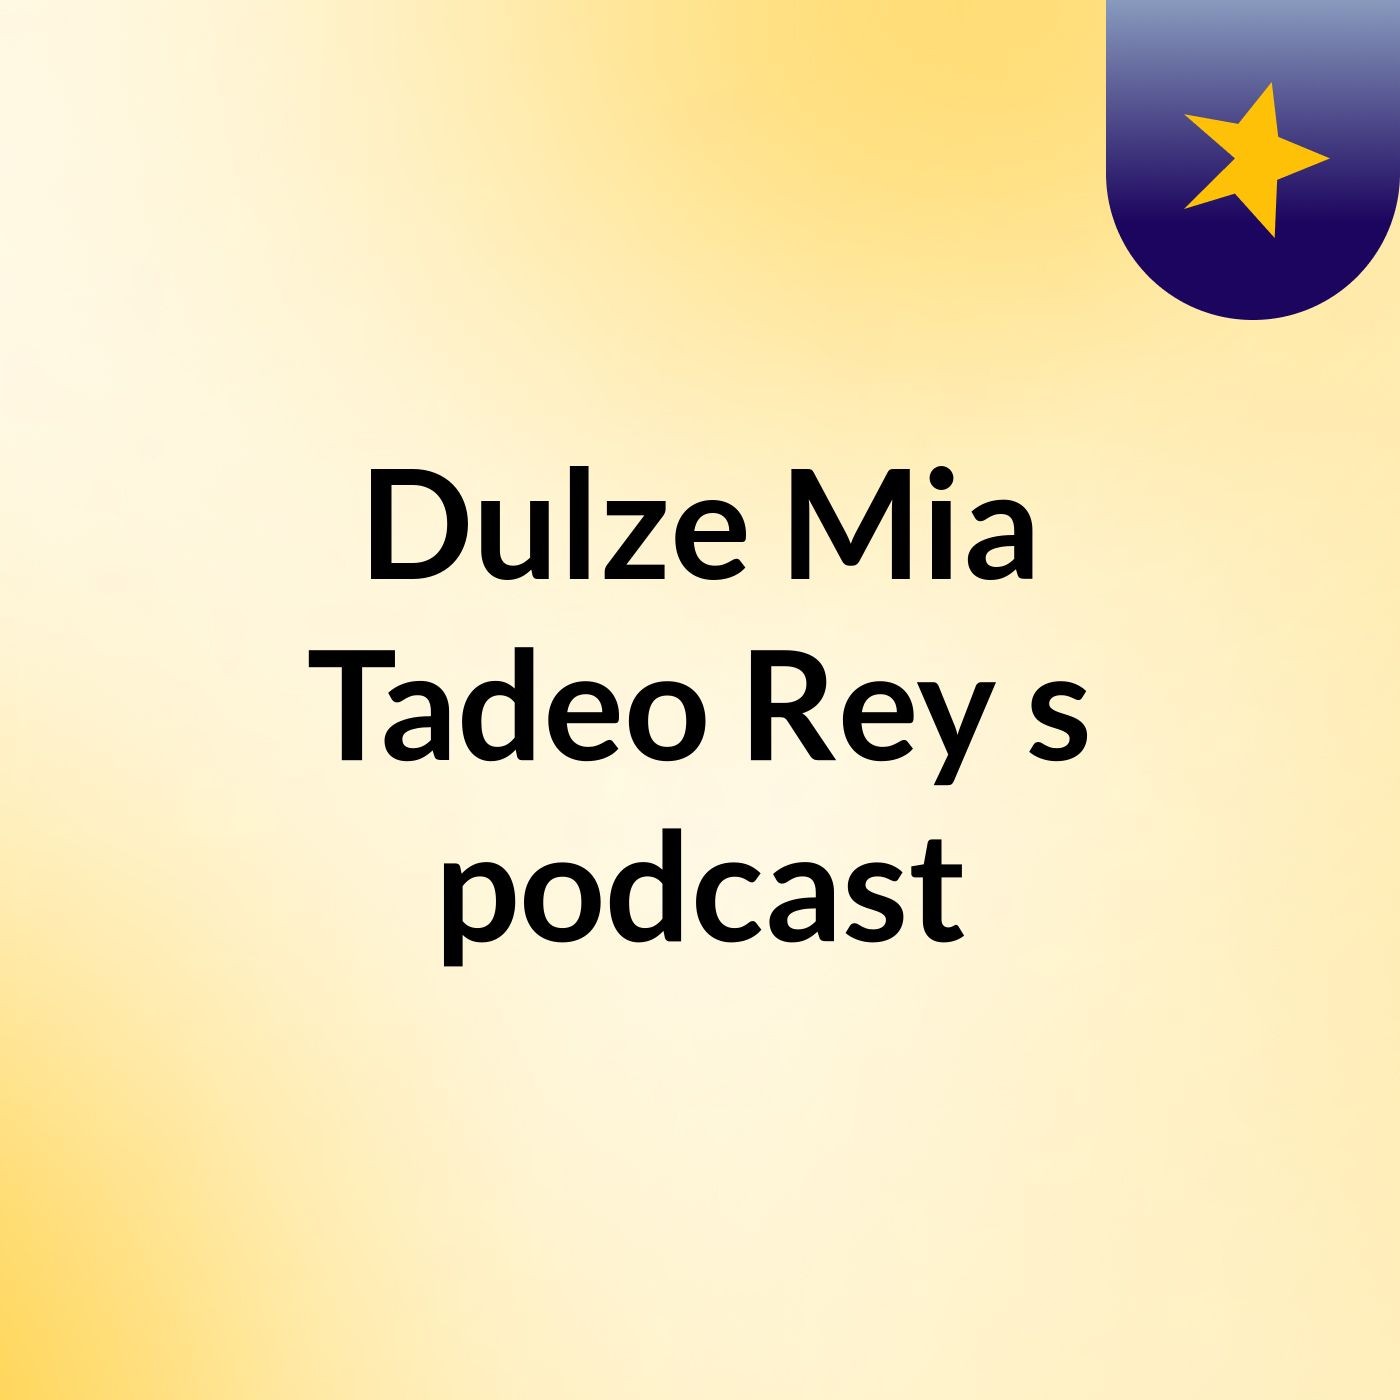 Episodio 8 - Dulze Mia Tadeo Rey's podcast